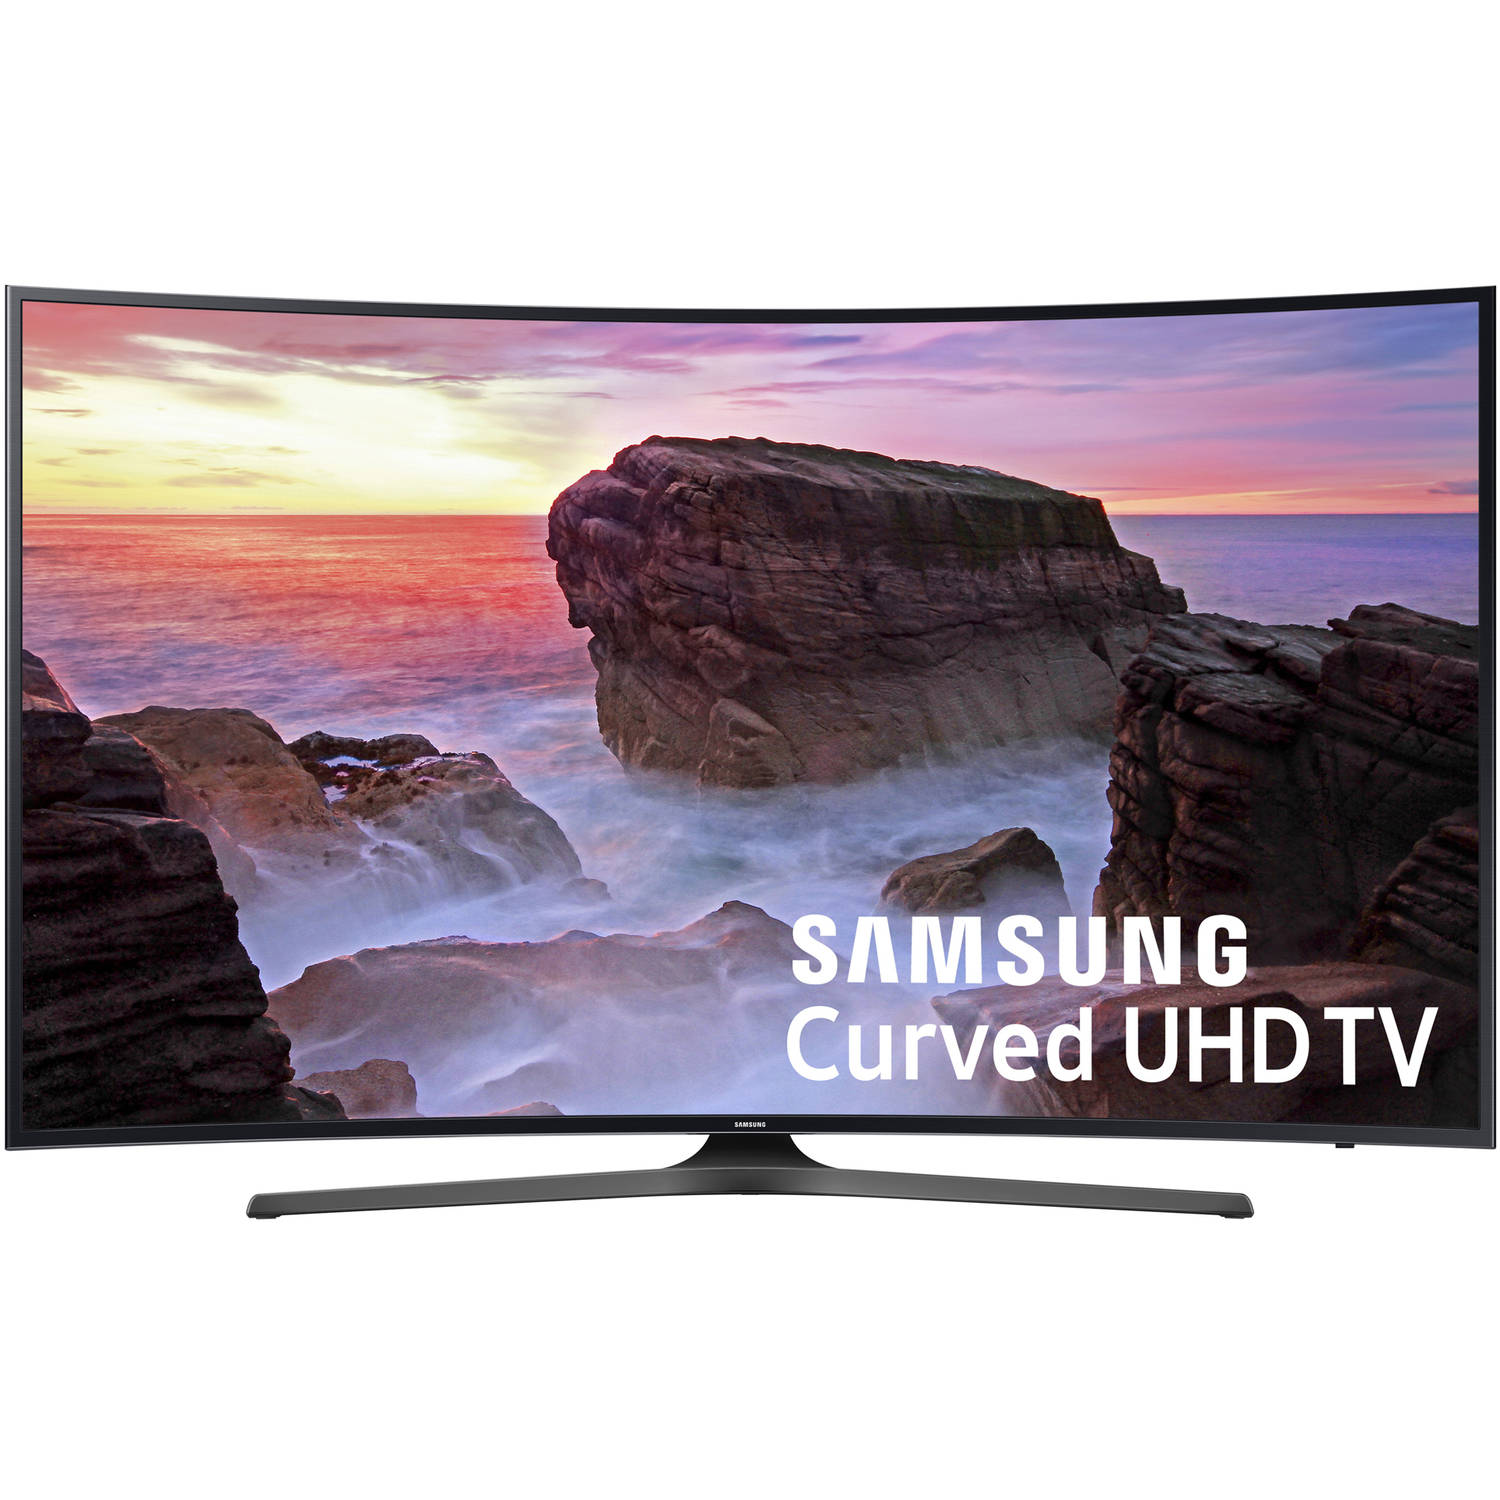 SAMSUNG 55" Class Curved 4K (2160P) Ultra HD Smart LED TV (UN55MU6500FXZA) - image 1 of 8